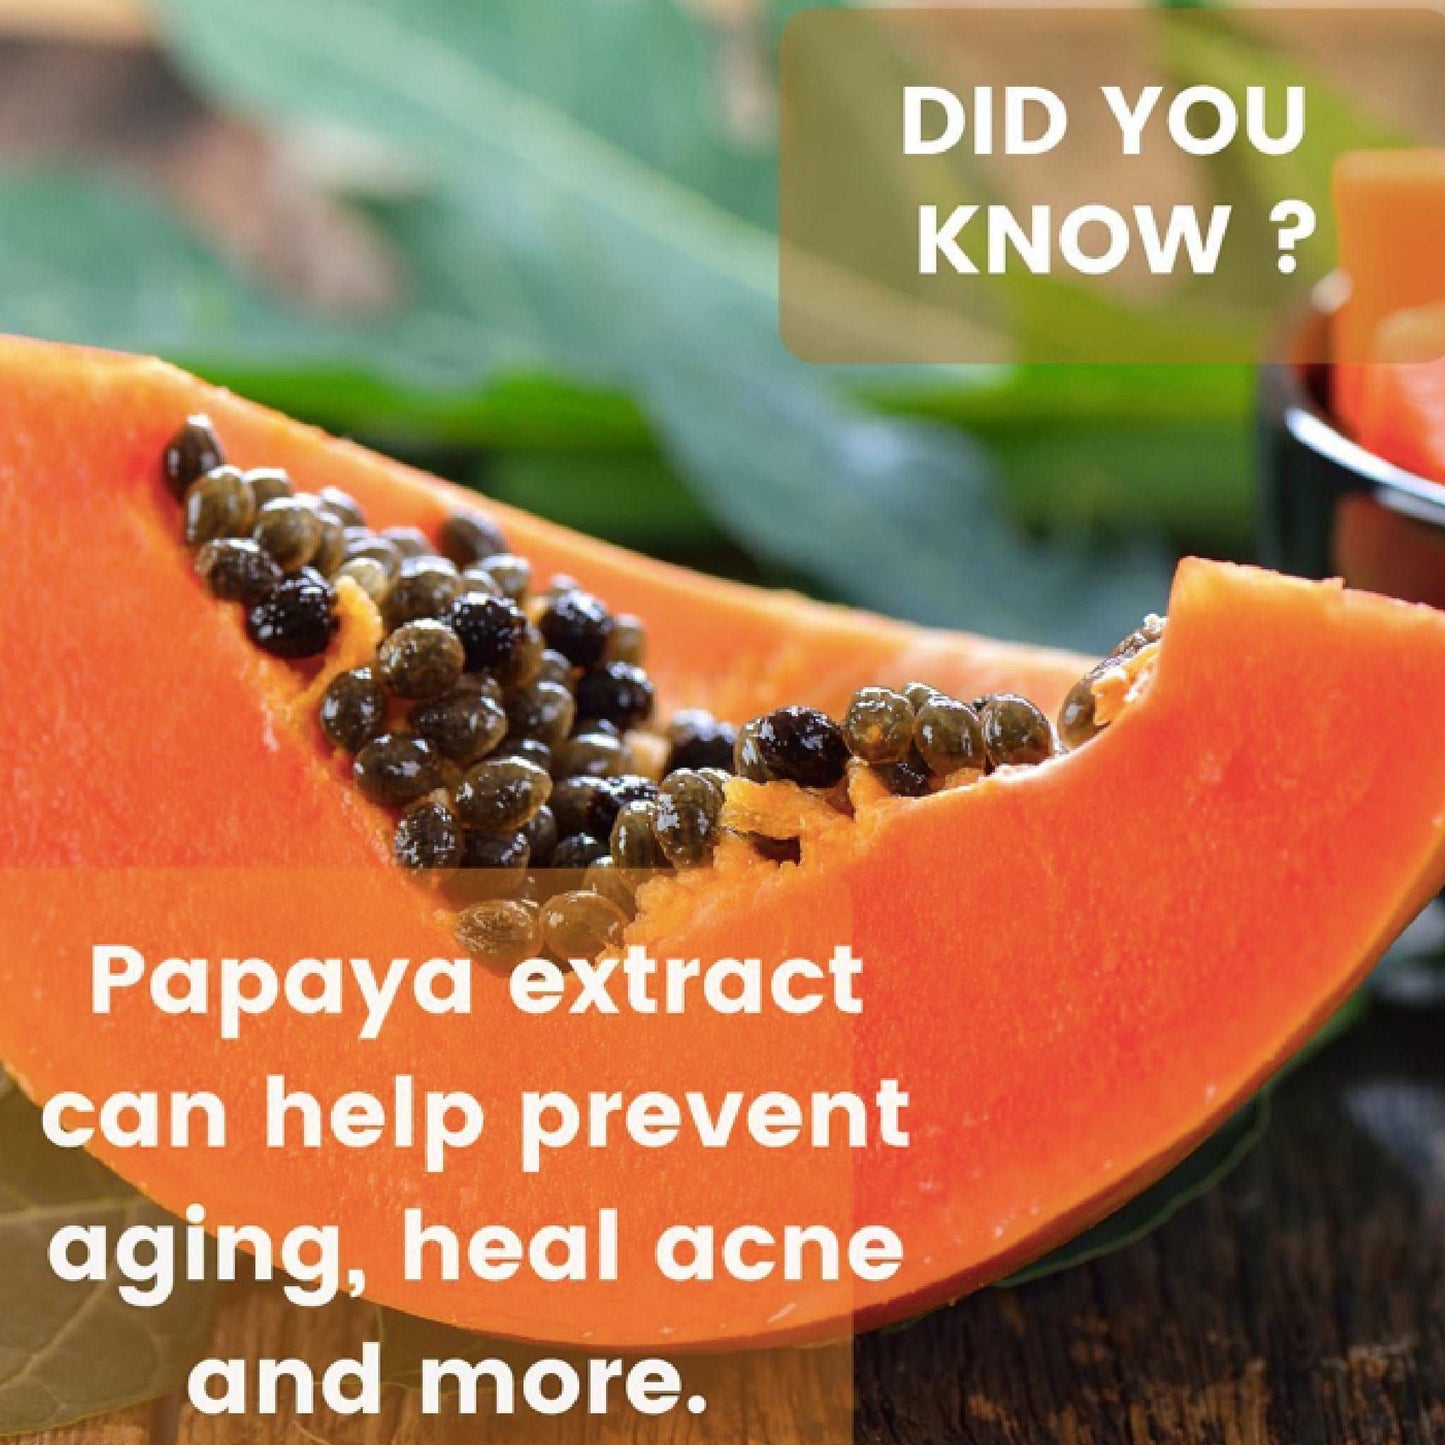 papaya extract benefits listed beside a slice of papaya with seeds inside